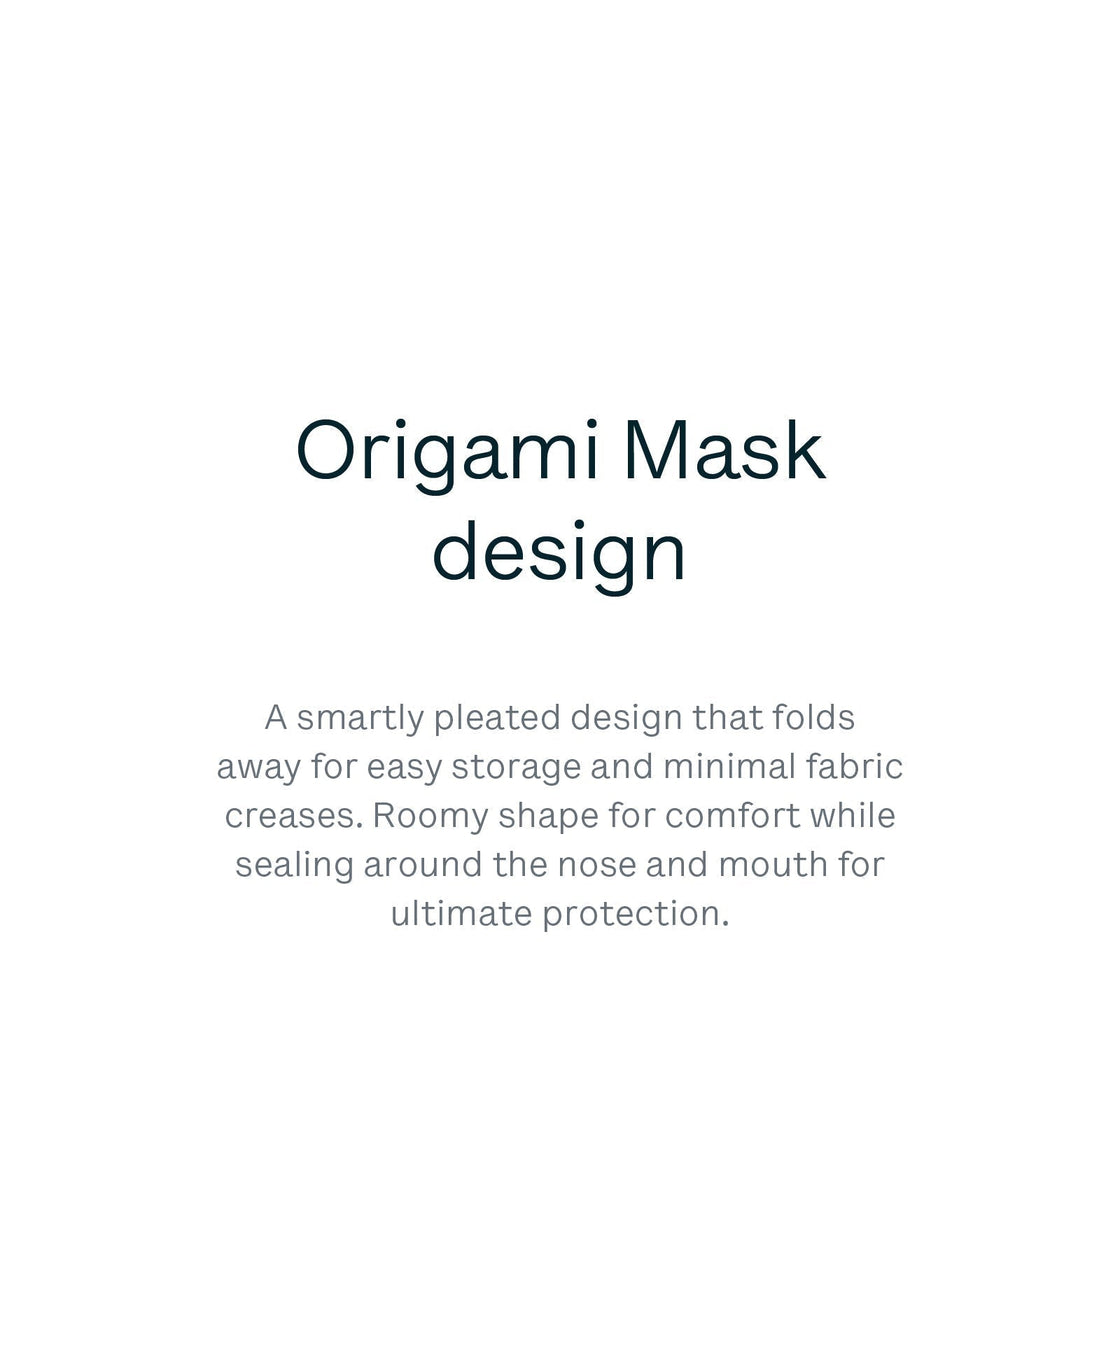 3 Origami Masks